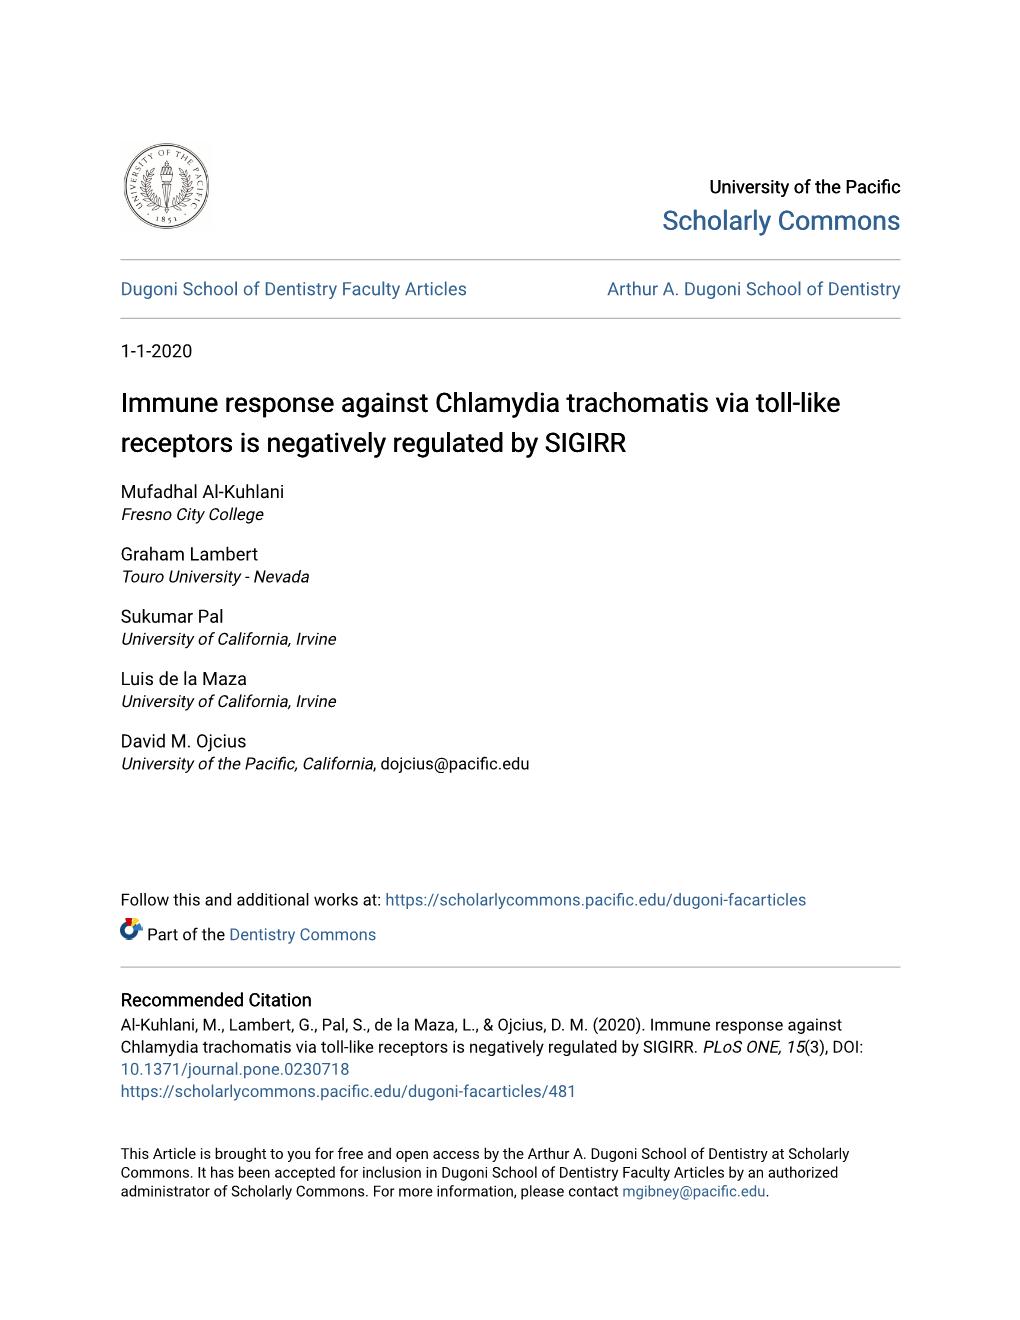 Immune Response Against Chlamydia Trachomatis Via Toll-Like Receptors Is Negatively Regulated by SIGIRR